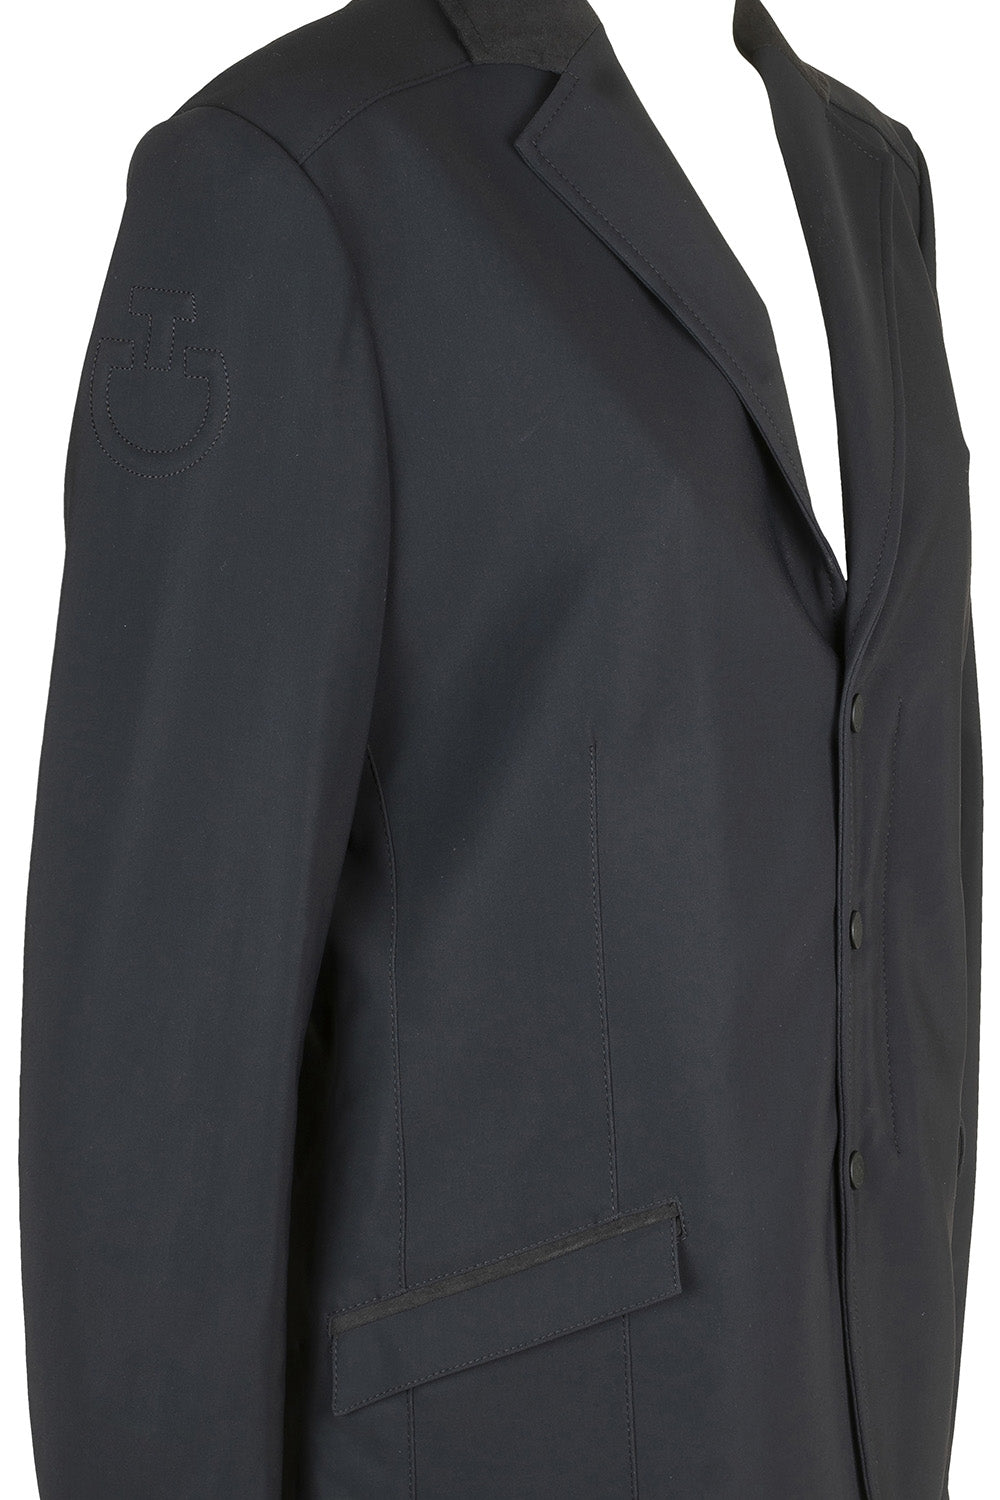 product shot image of the Mens Zip Riding Jacket - Black